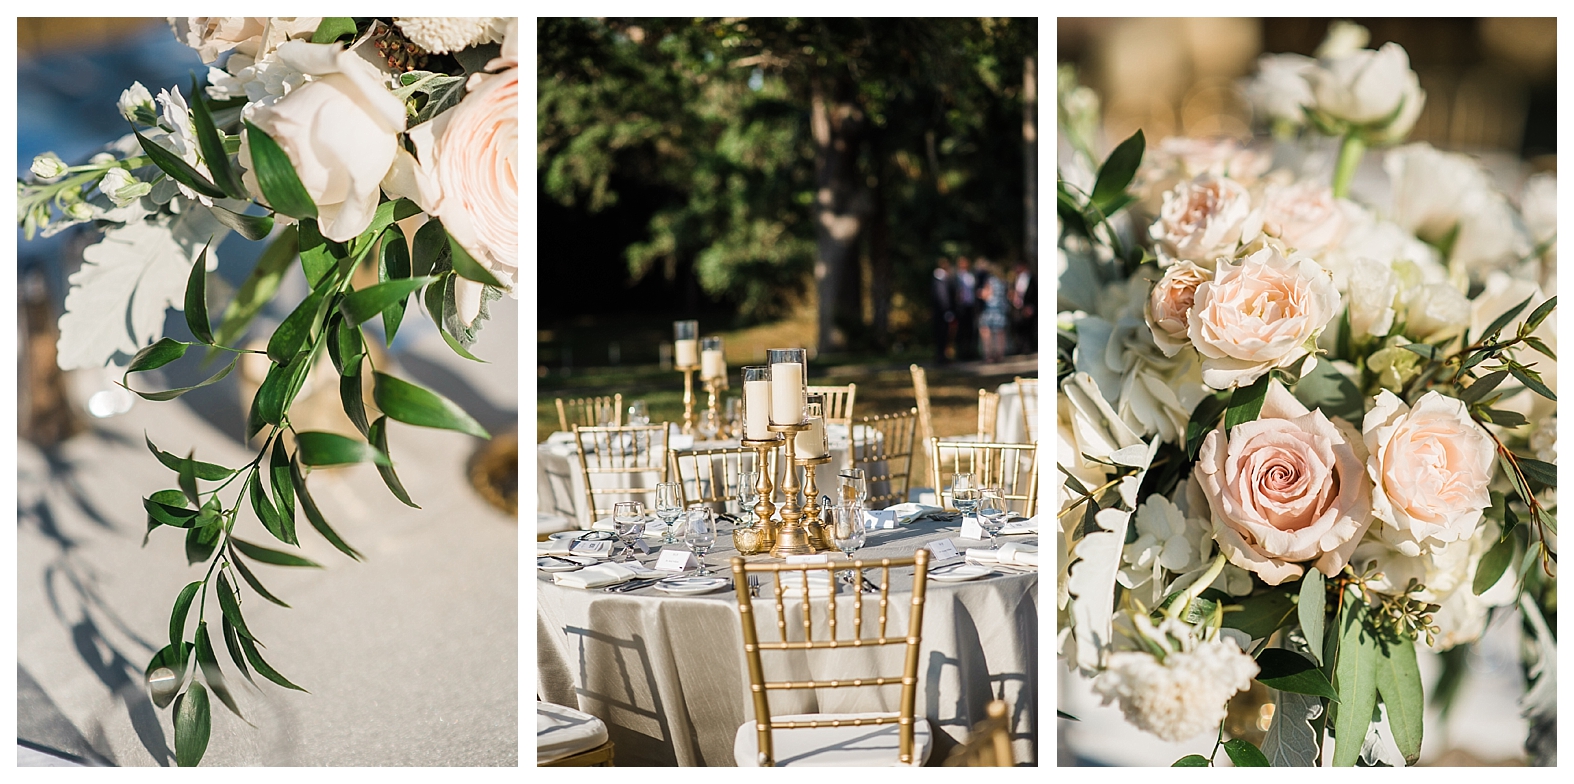 Wedding at Powel Crosley Estate - Sarasota Wedding Photographer, wedding reception, wedding reception details, wedding florals, wedding flowers, wedding table